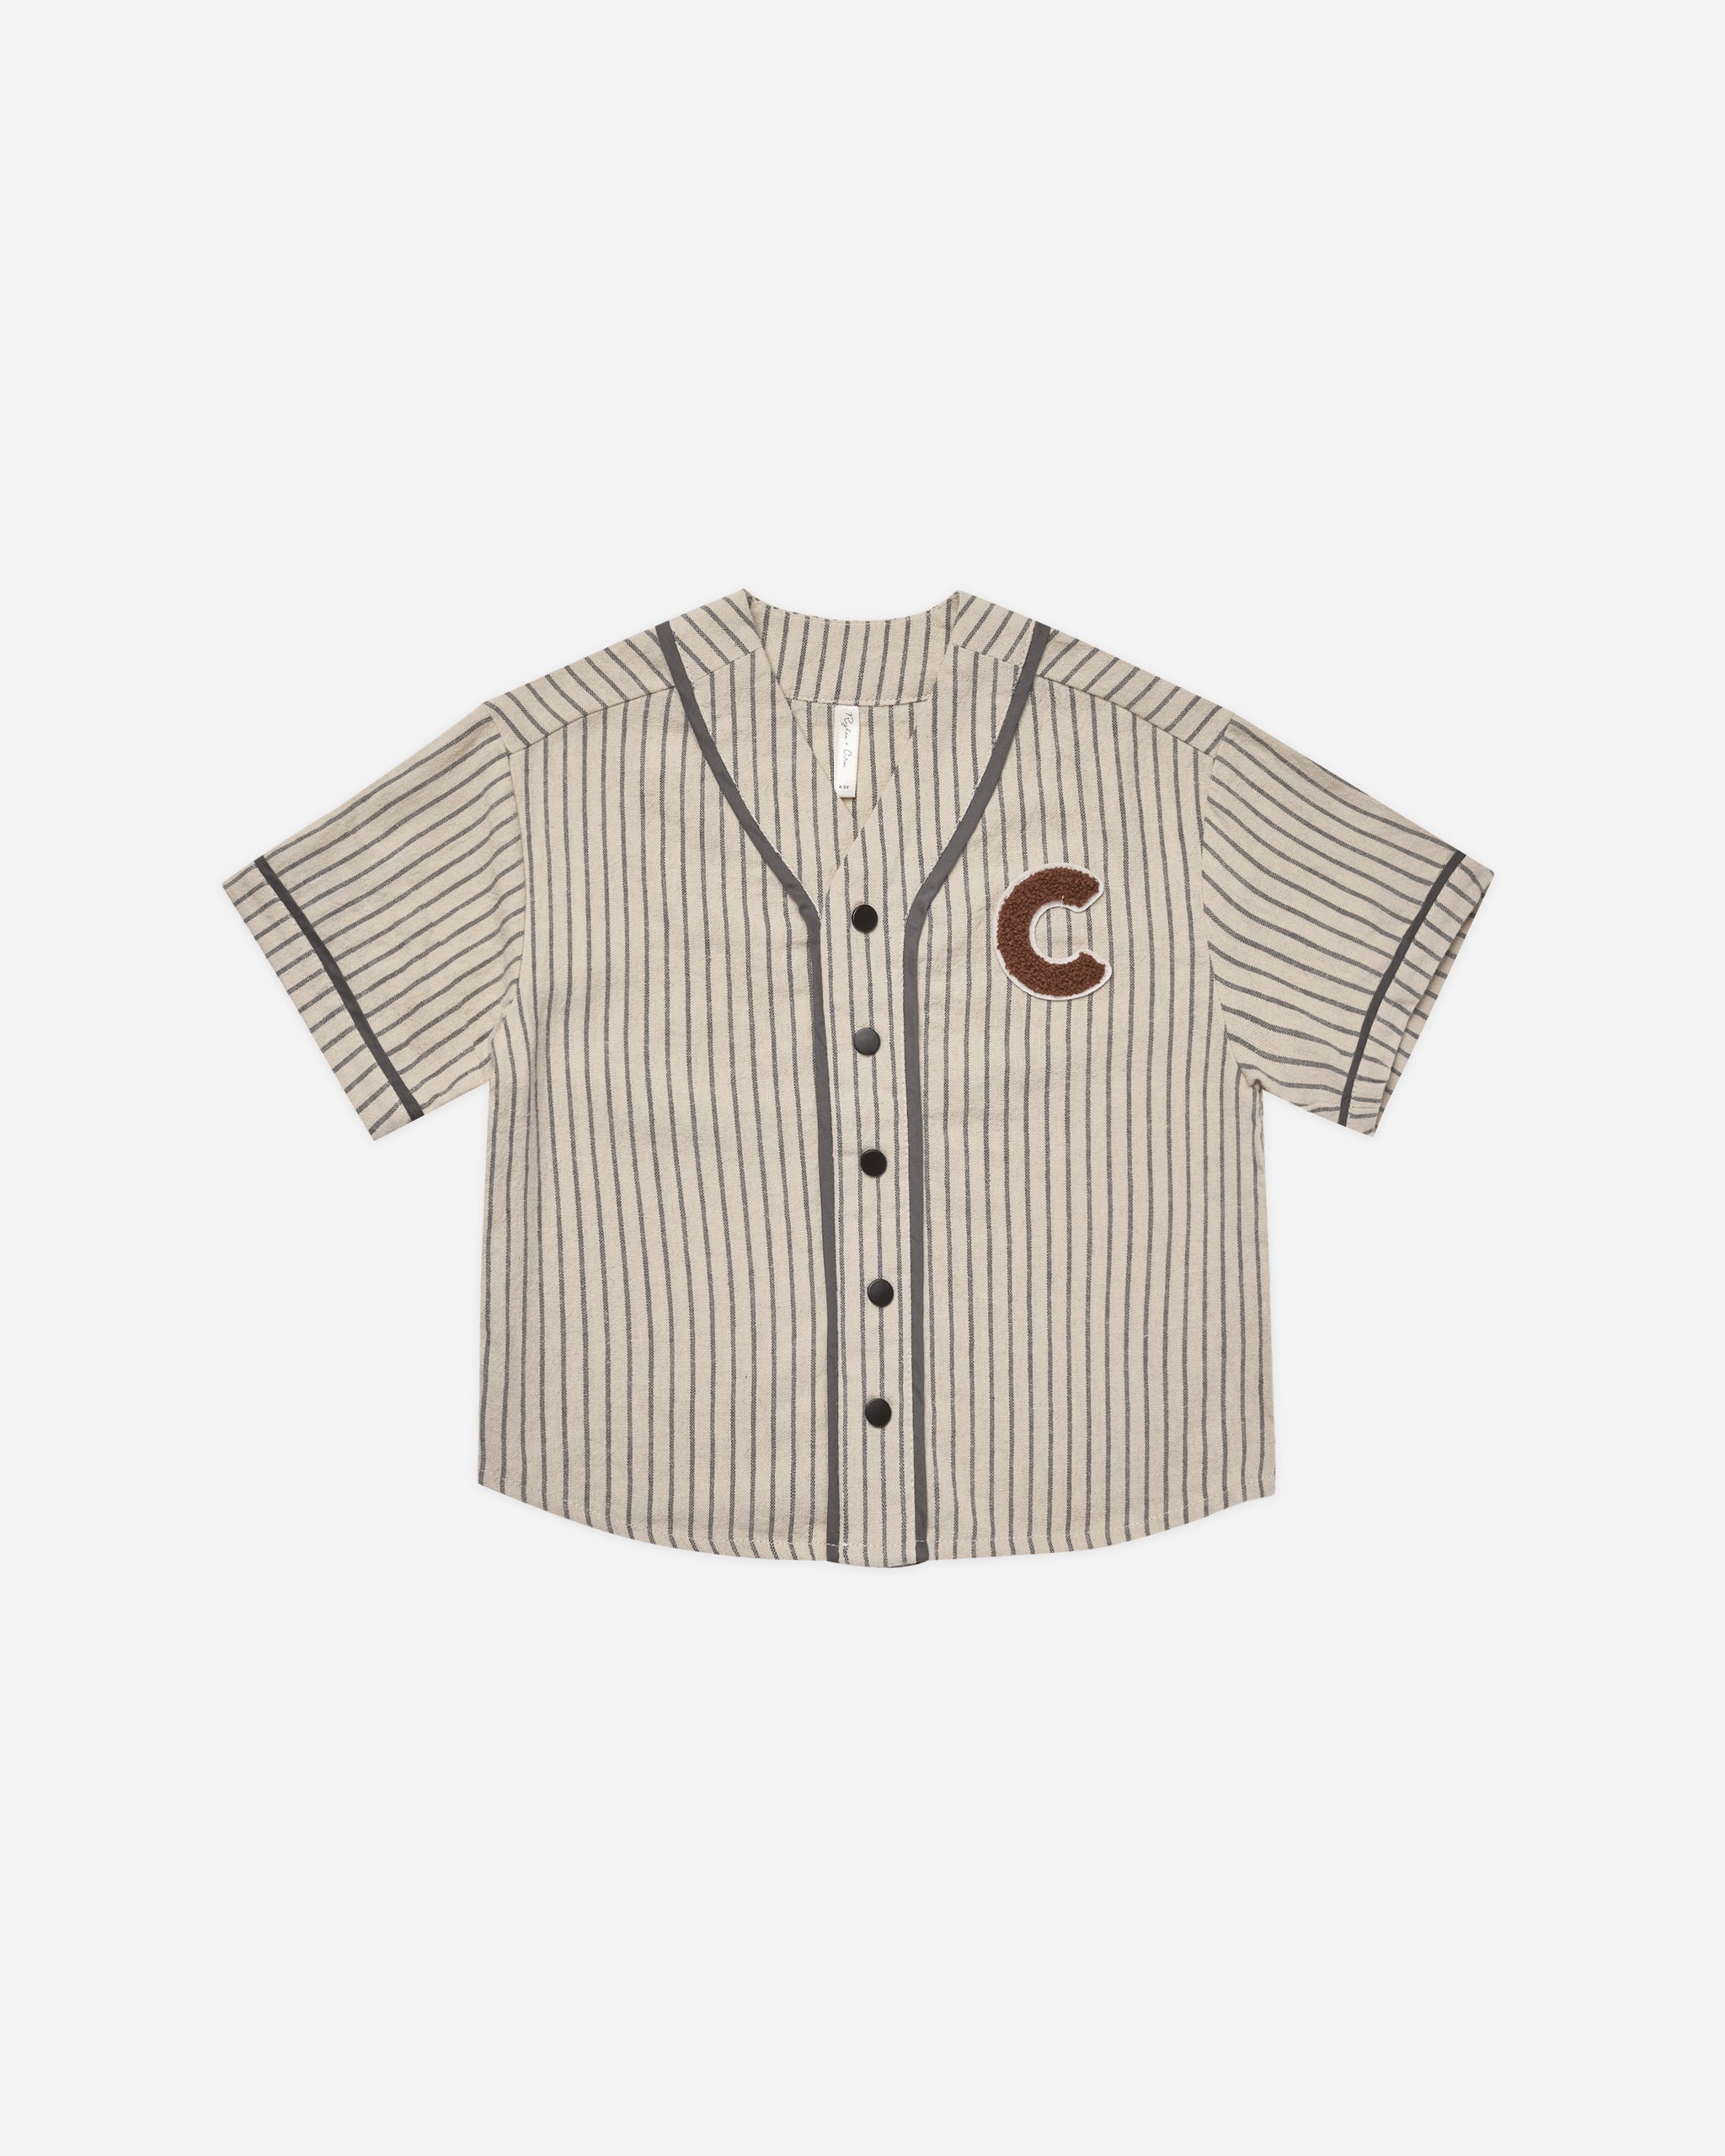 Kids' Button Down Baseball Jersey - Shirts & Top